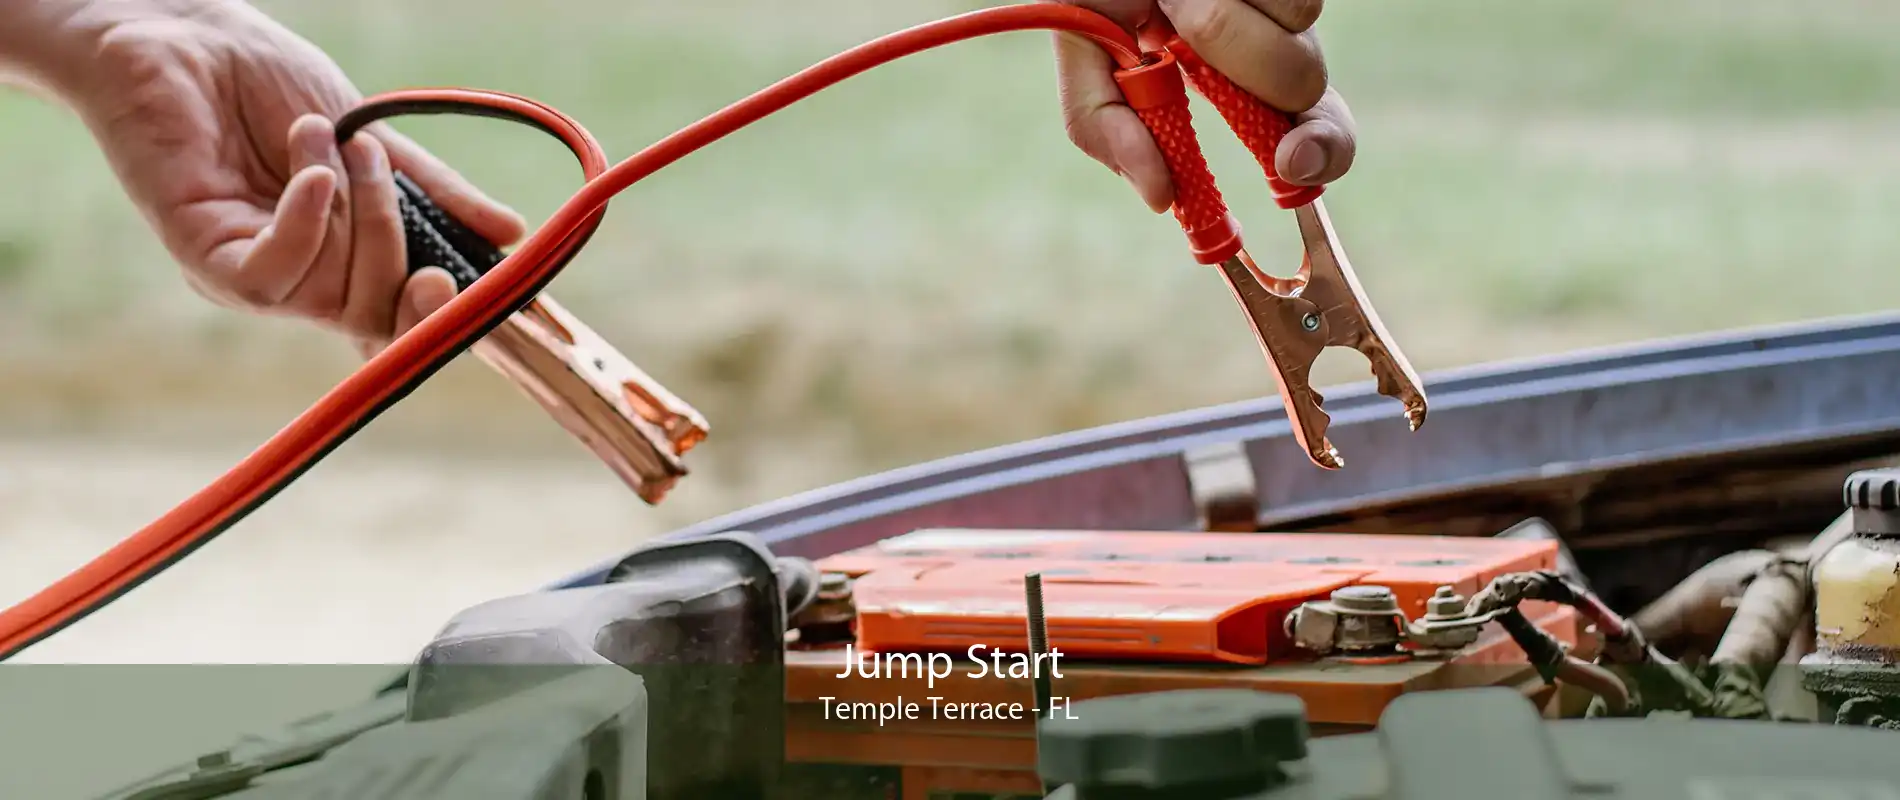 Jump Start Temple Terrace - FL